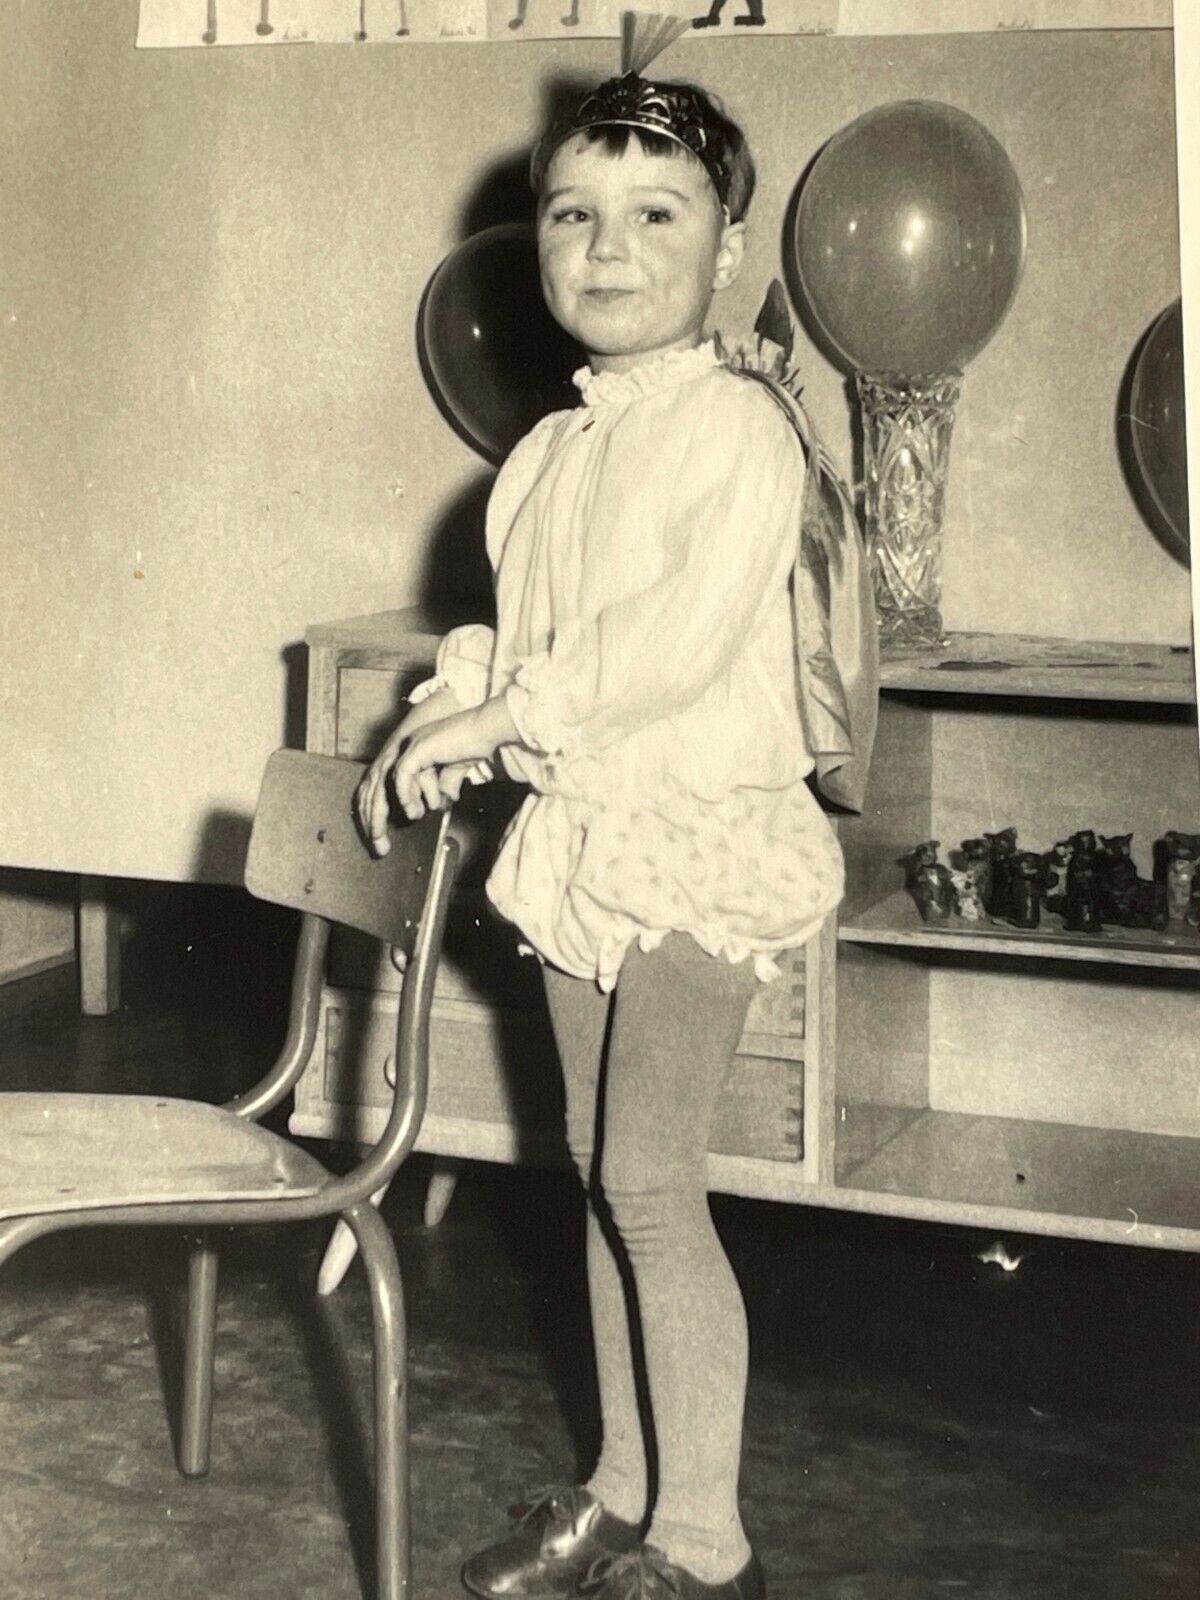 R3 Photograph German Boy Costume 1968 Class School